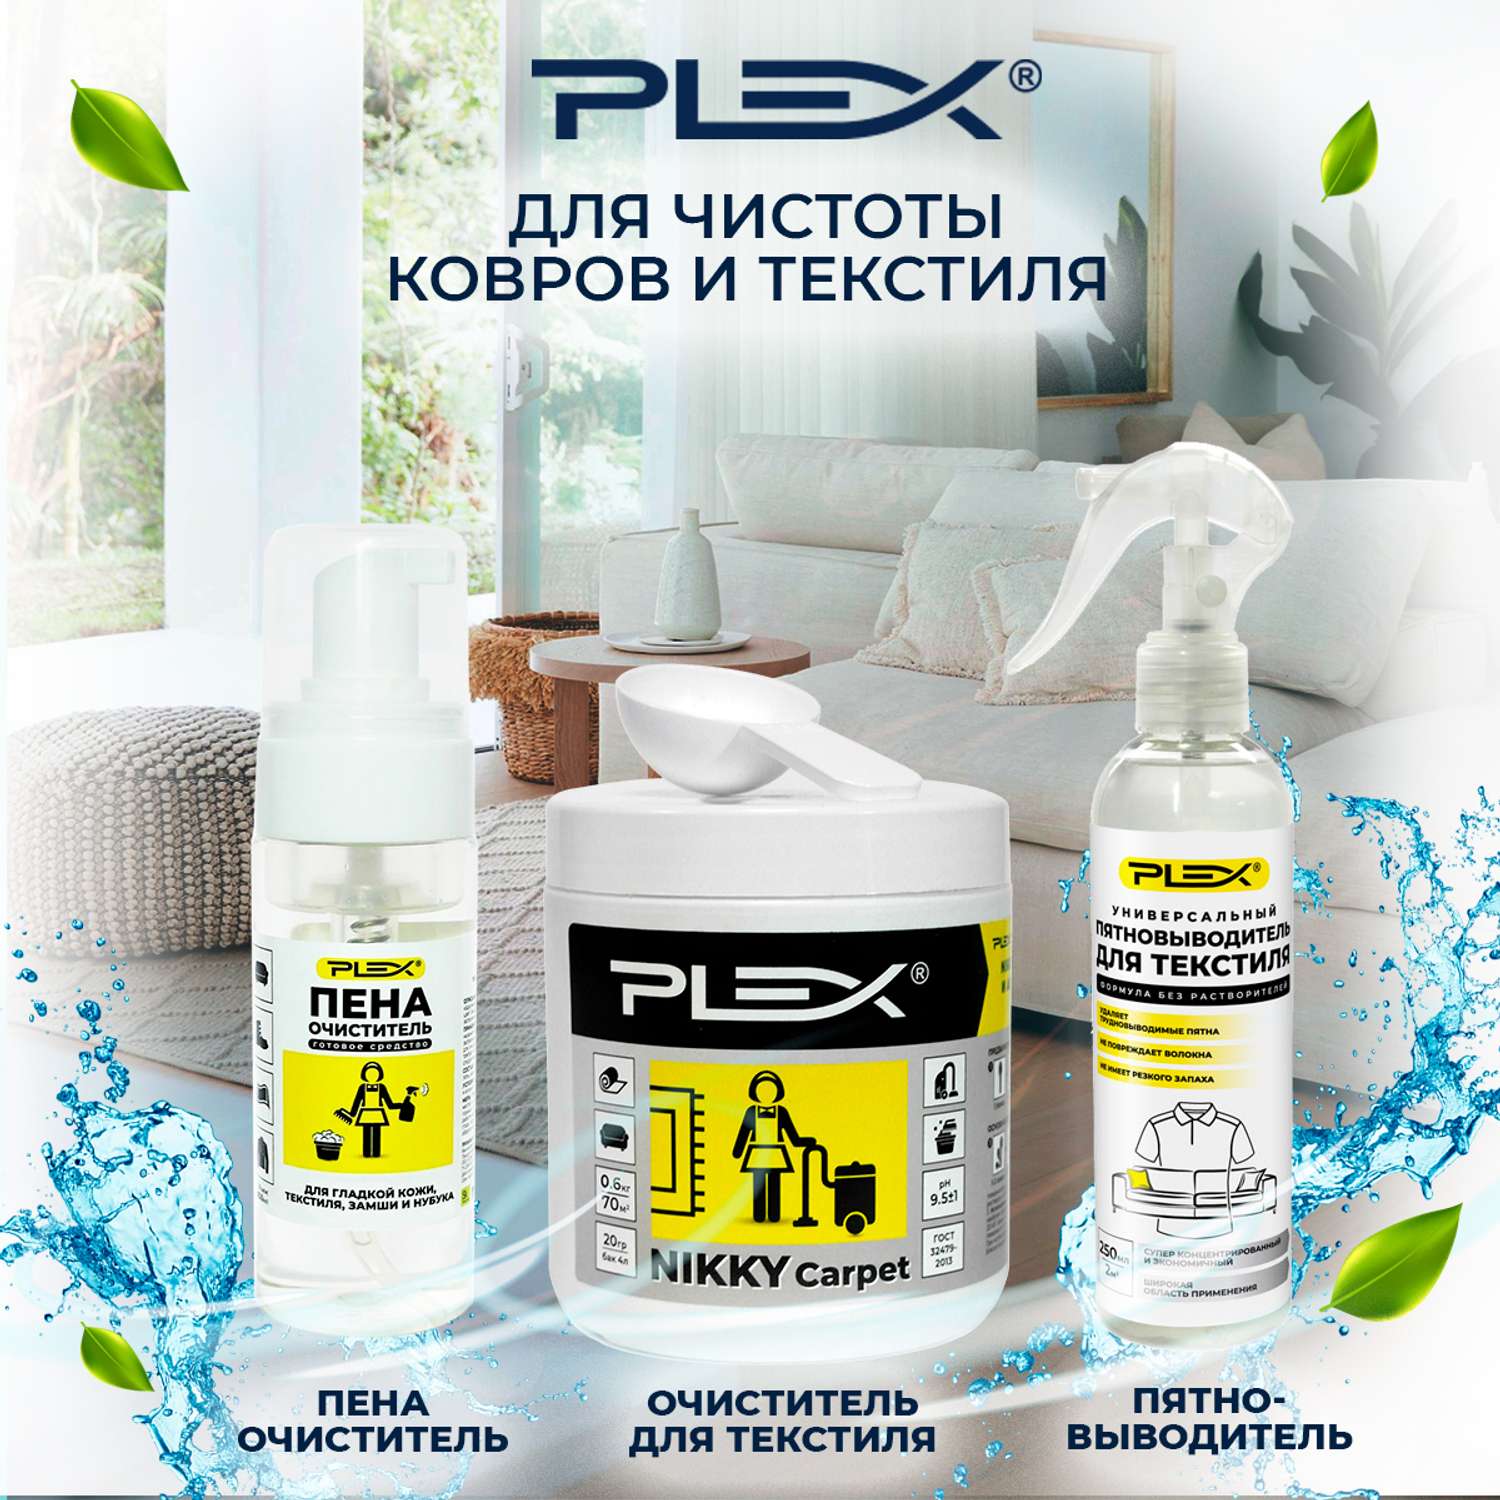 Пятновыводитель для текстиля Plex 250мл - фото 5